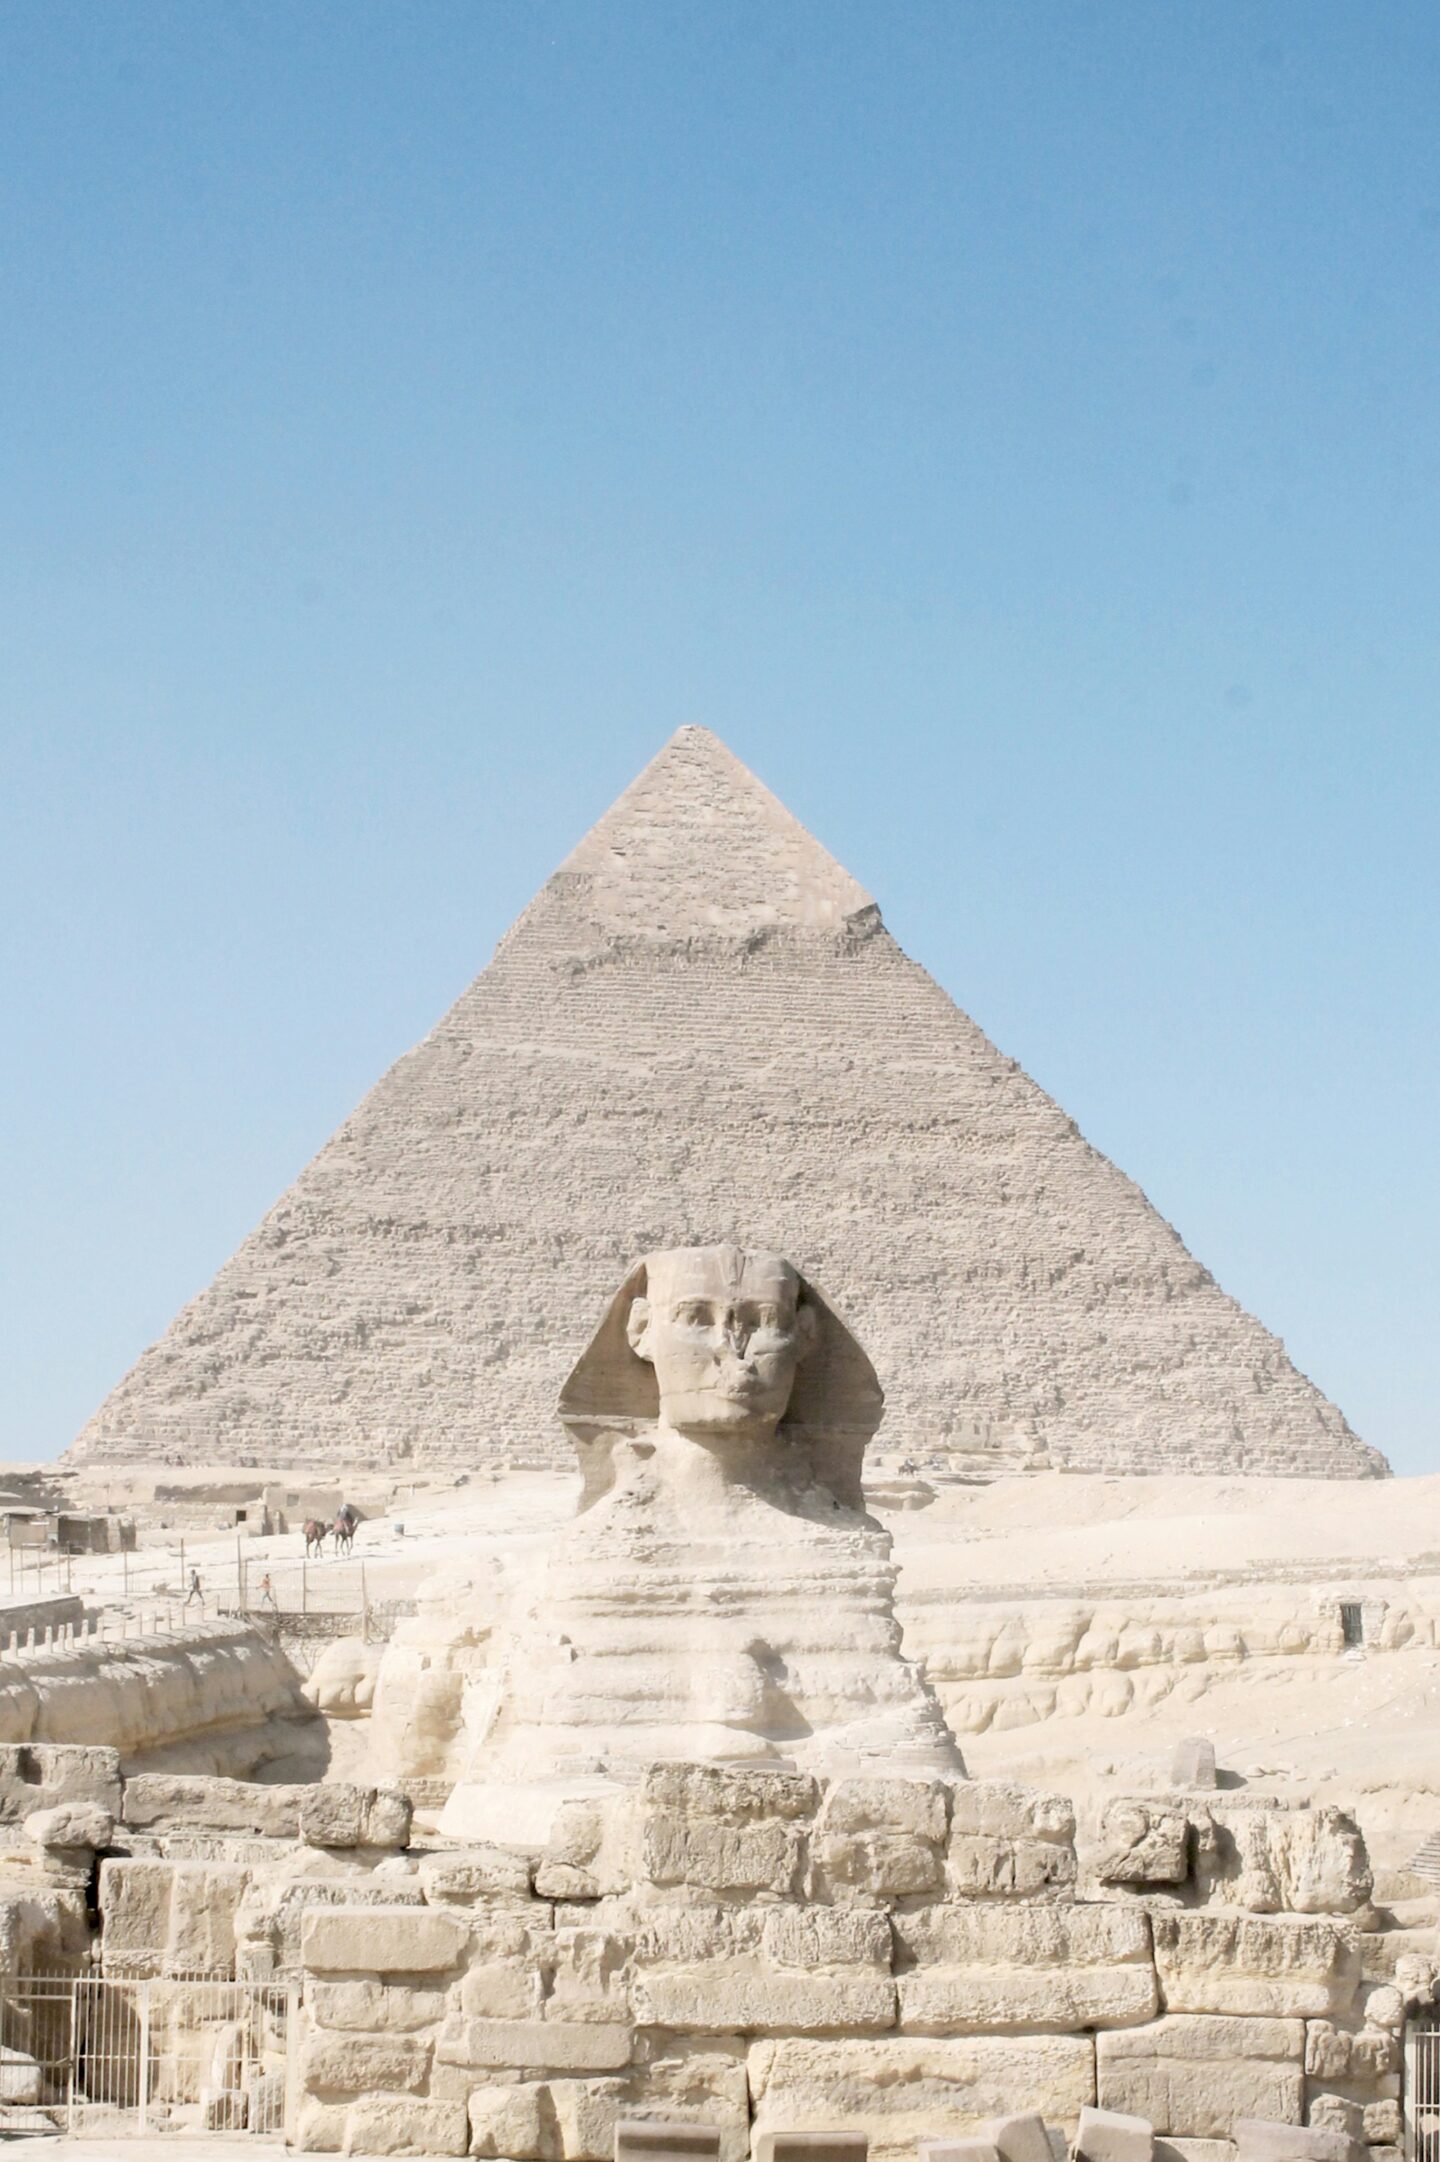 Discover Egypt: Pyramids of Giza & Sphinx